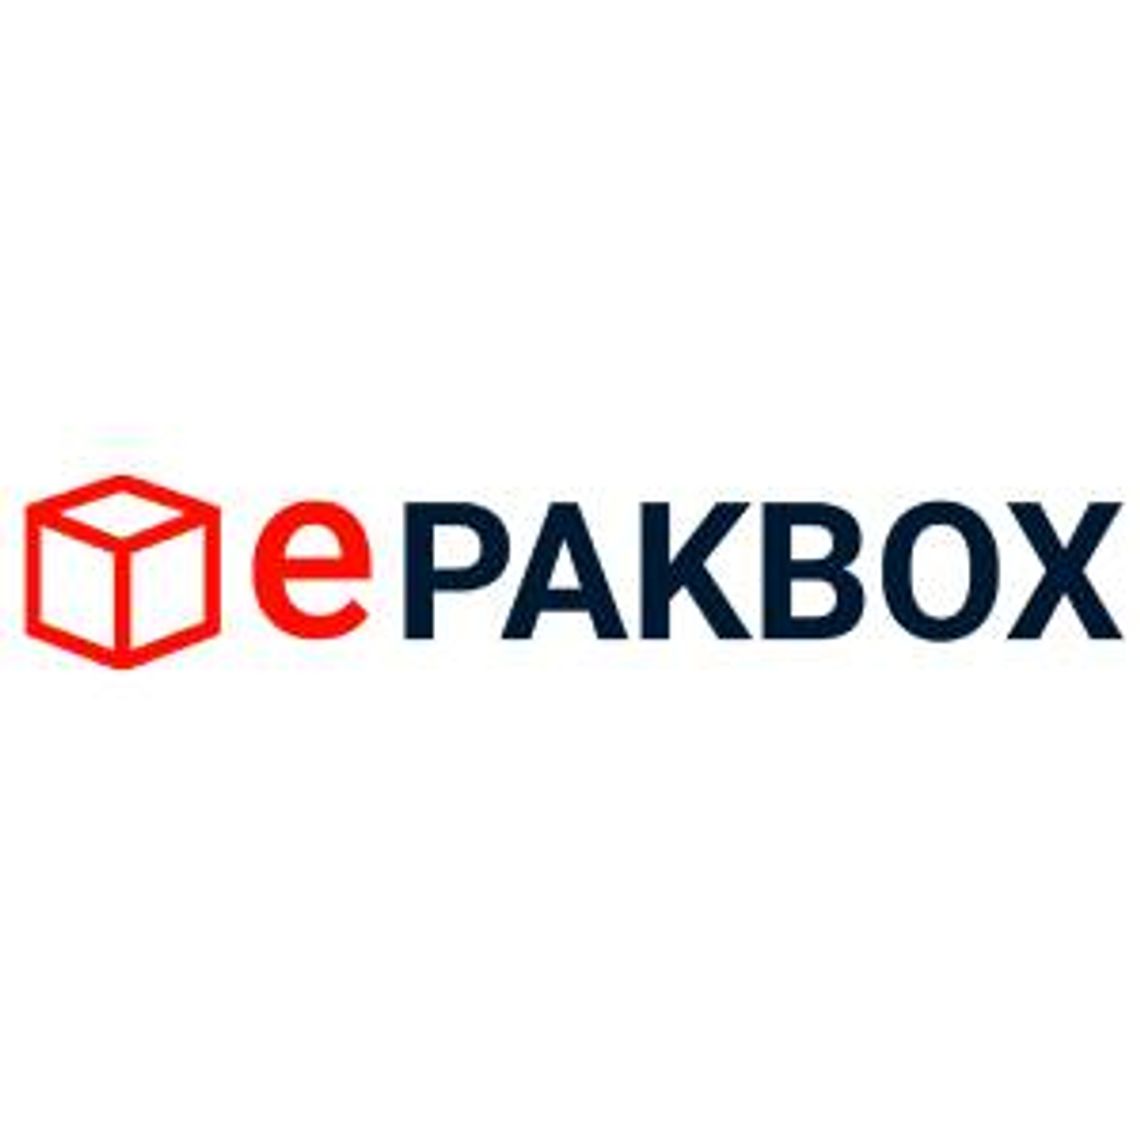 Folia bąbelkowa do pakowania - EpakBox